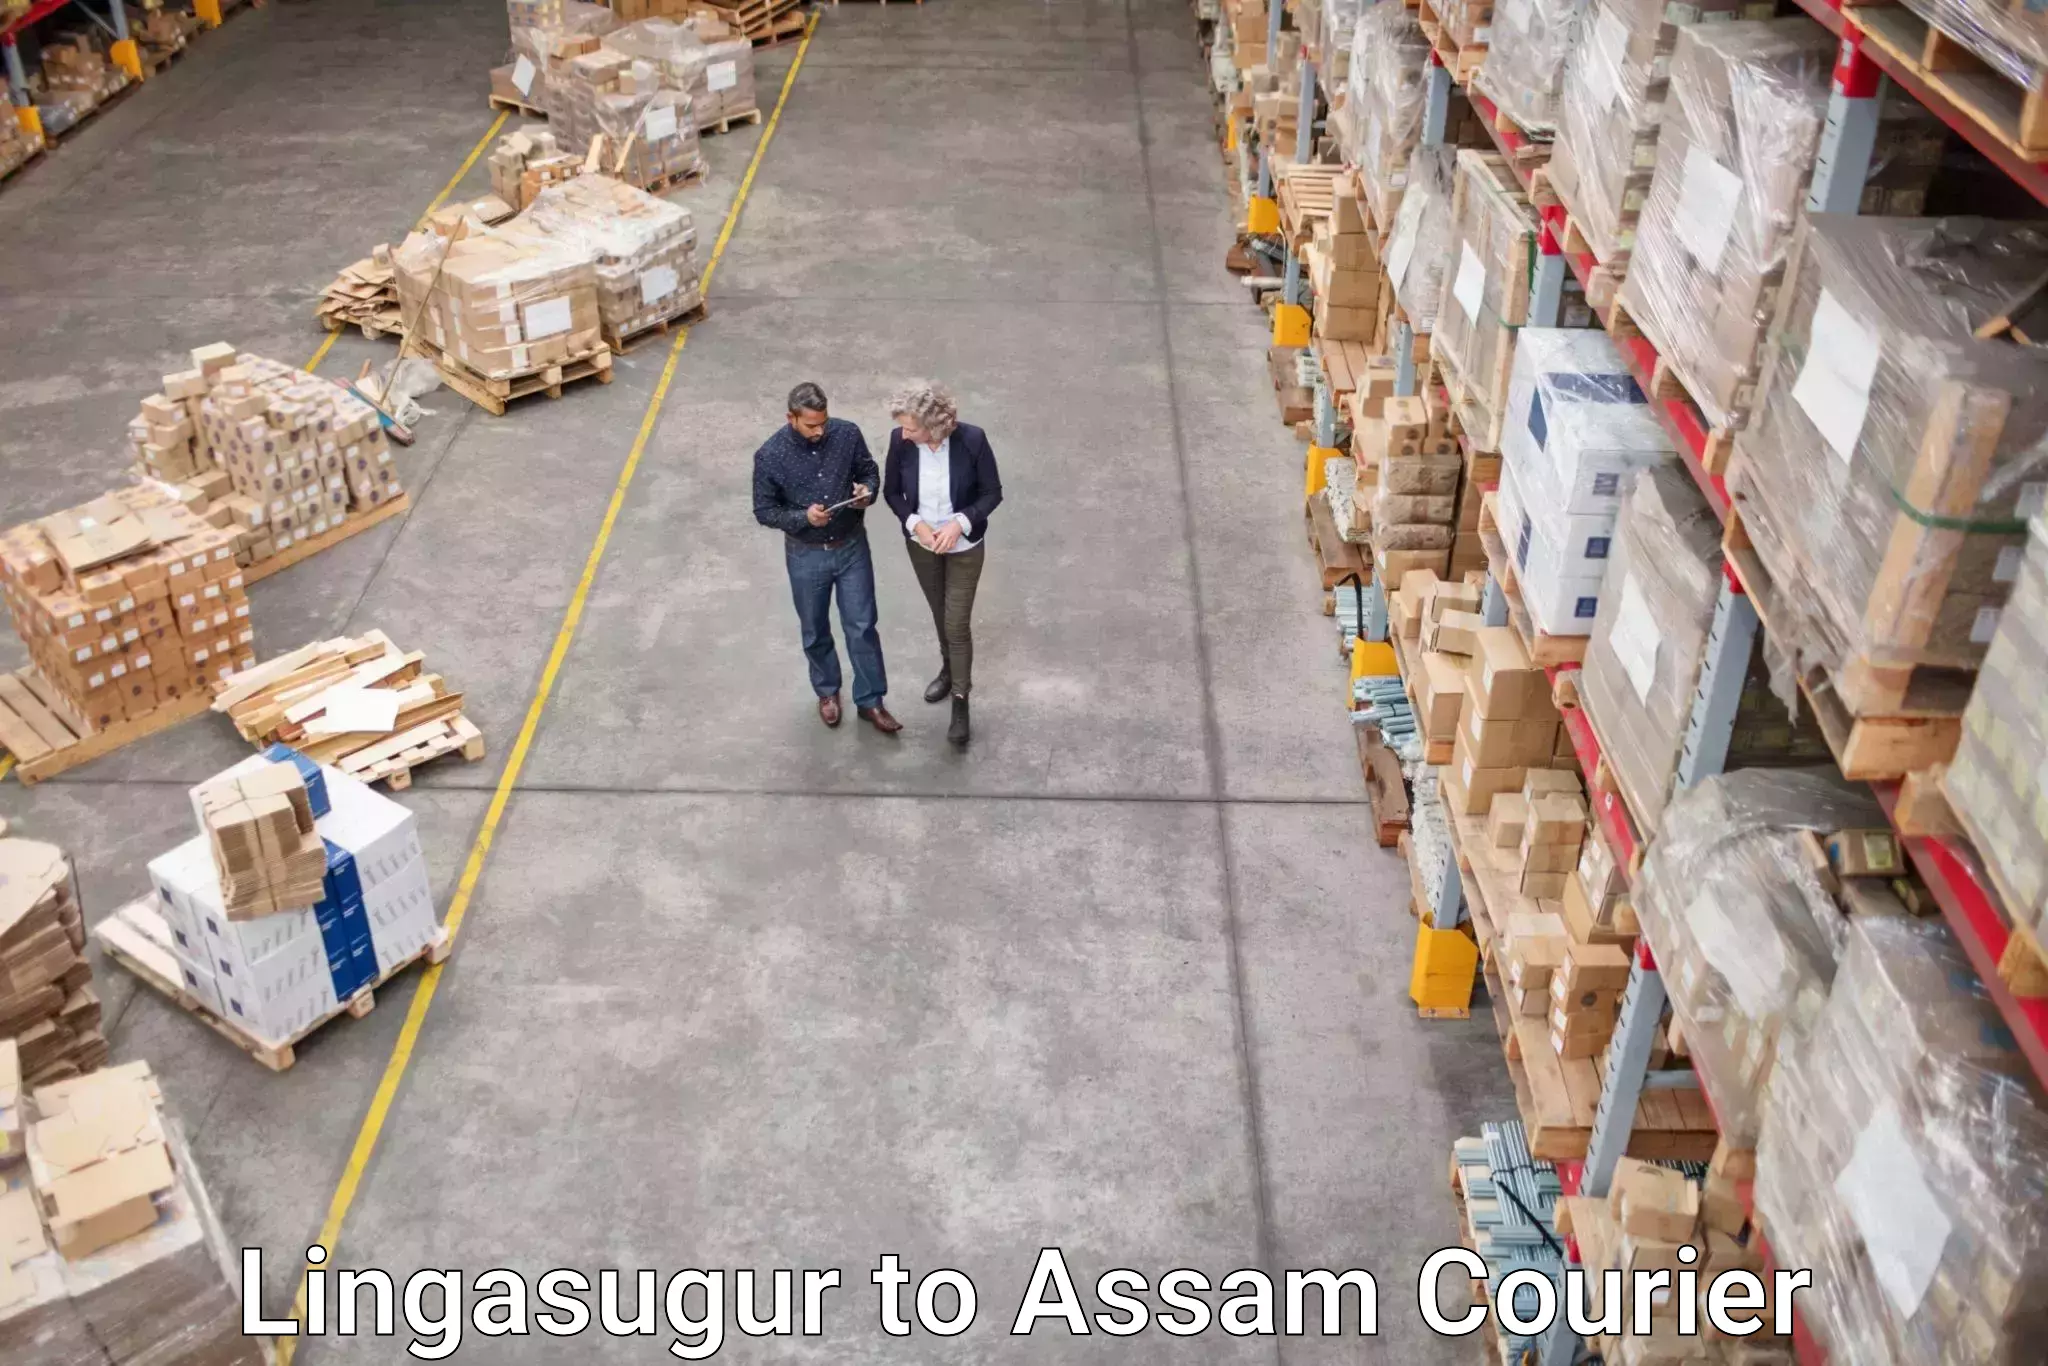 Cash on delivery service Lingasugur to Lala Assam